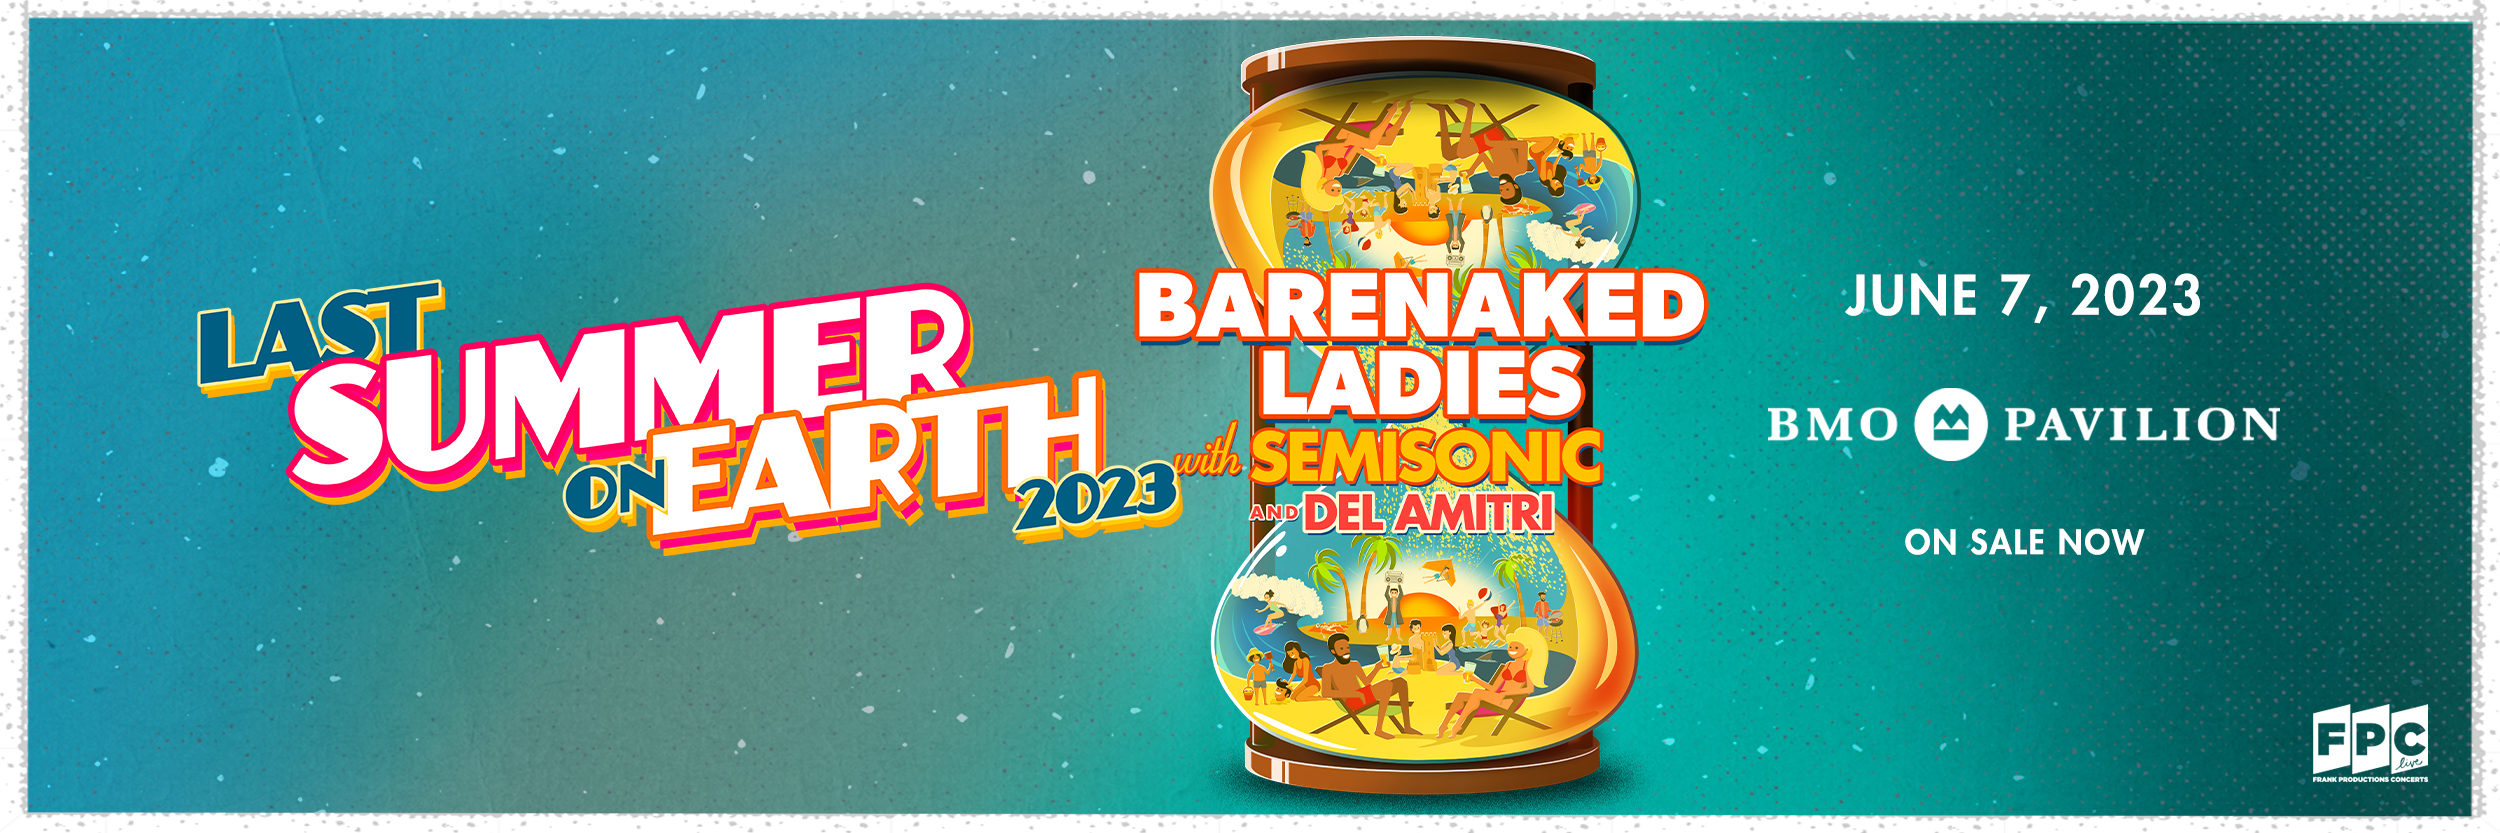 Barenaked Ladies Last Summer on Earth 2023 Tour, June 7th